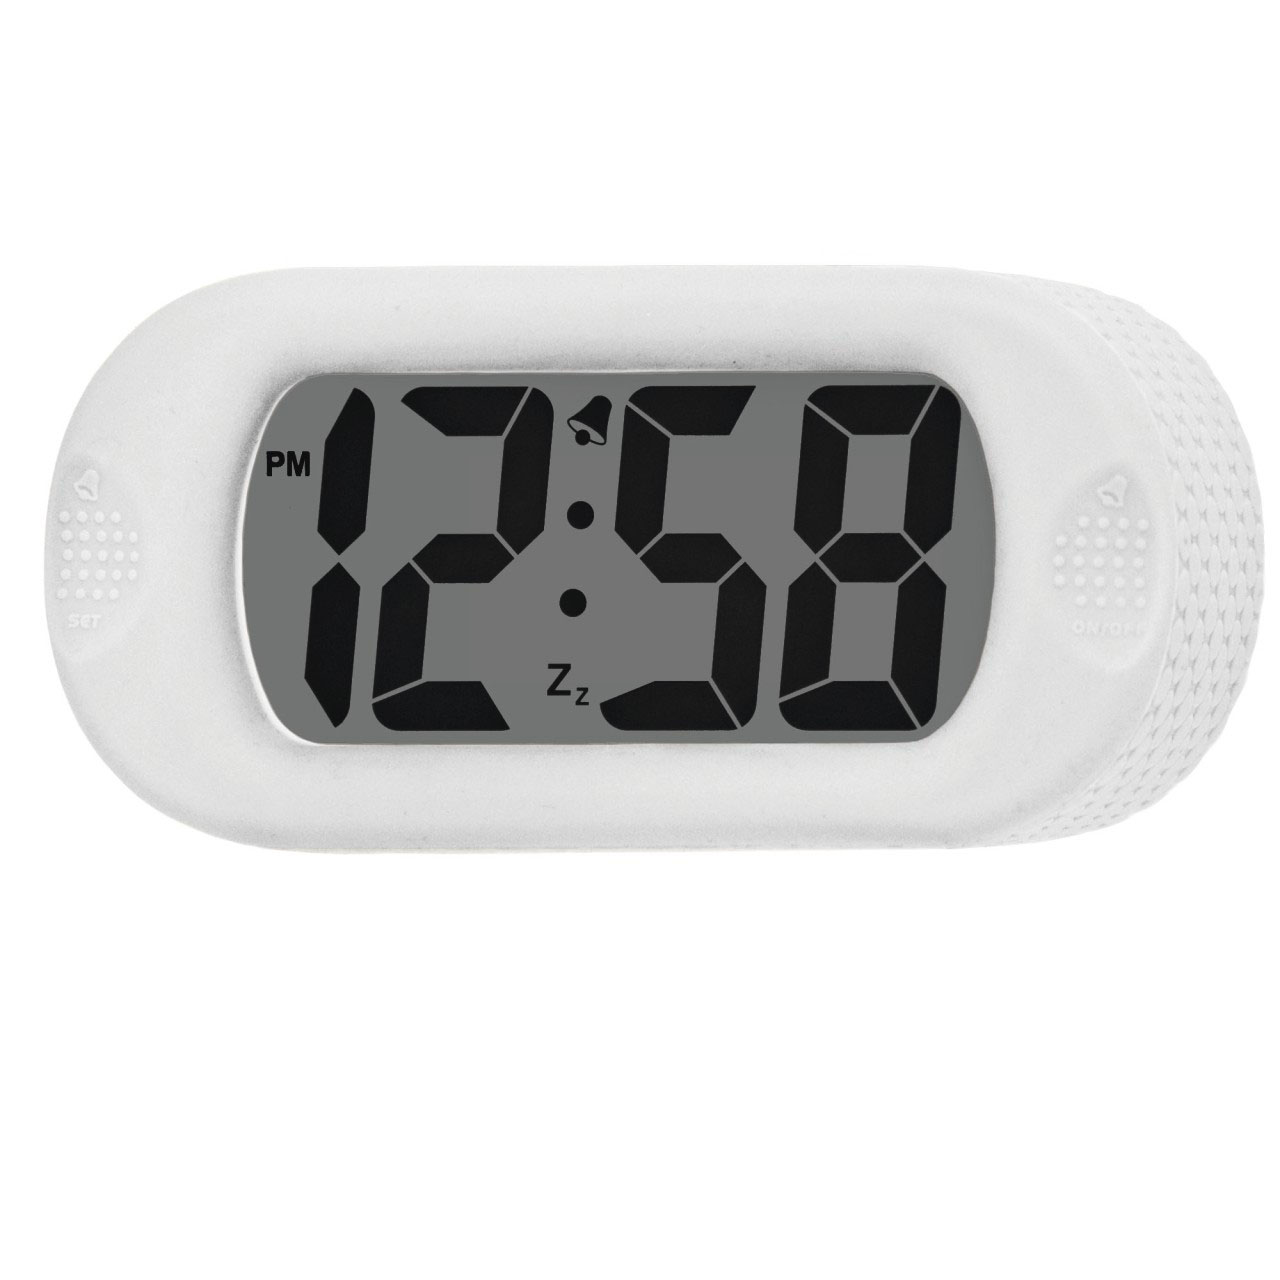 Jumbo Digital Alarm Clock